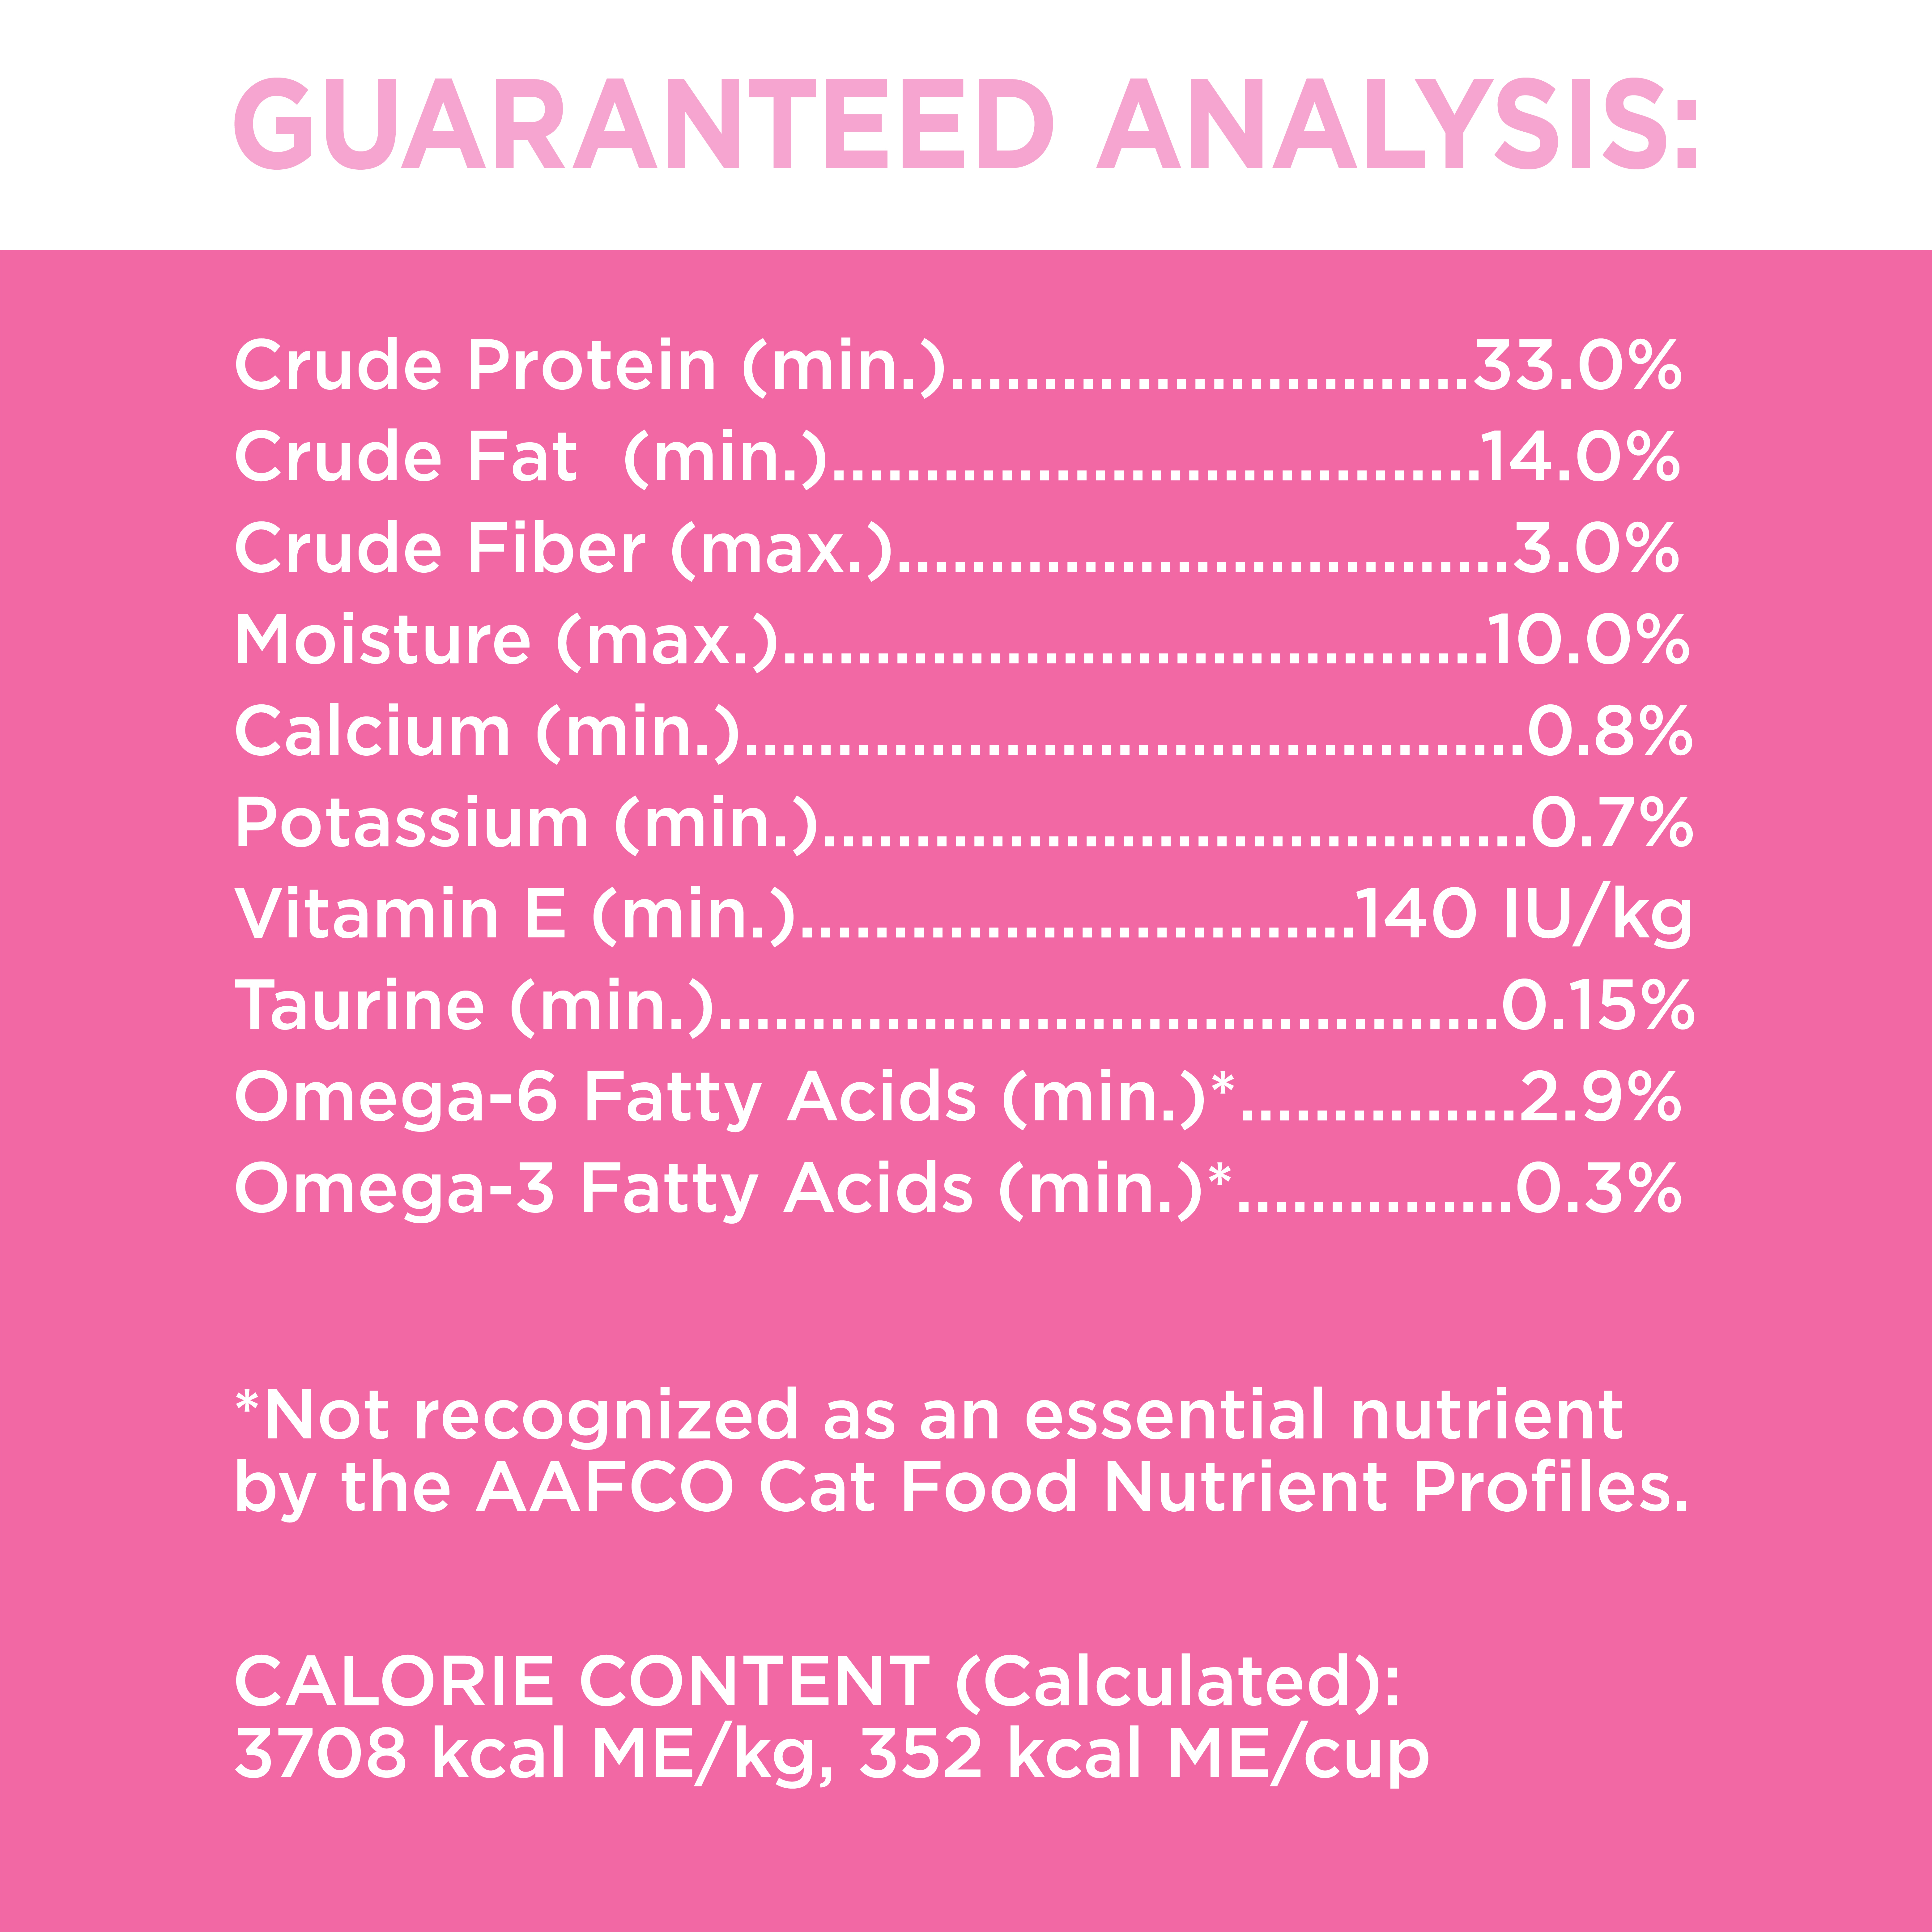 IAMS™ PROACTIVE HEALTH™ Healthy Digestion & Skin Cat Food guaranteed analysis image